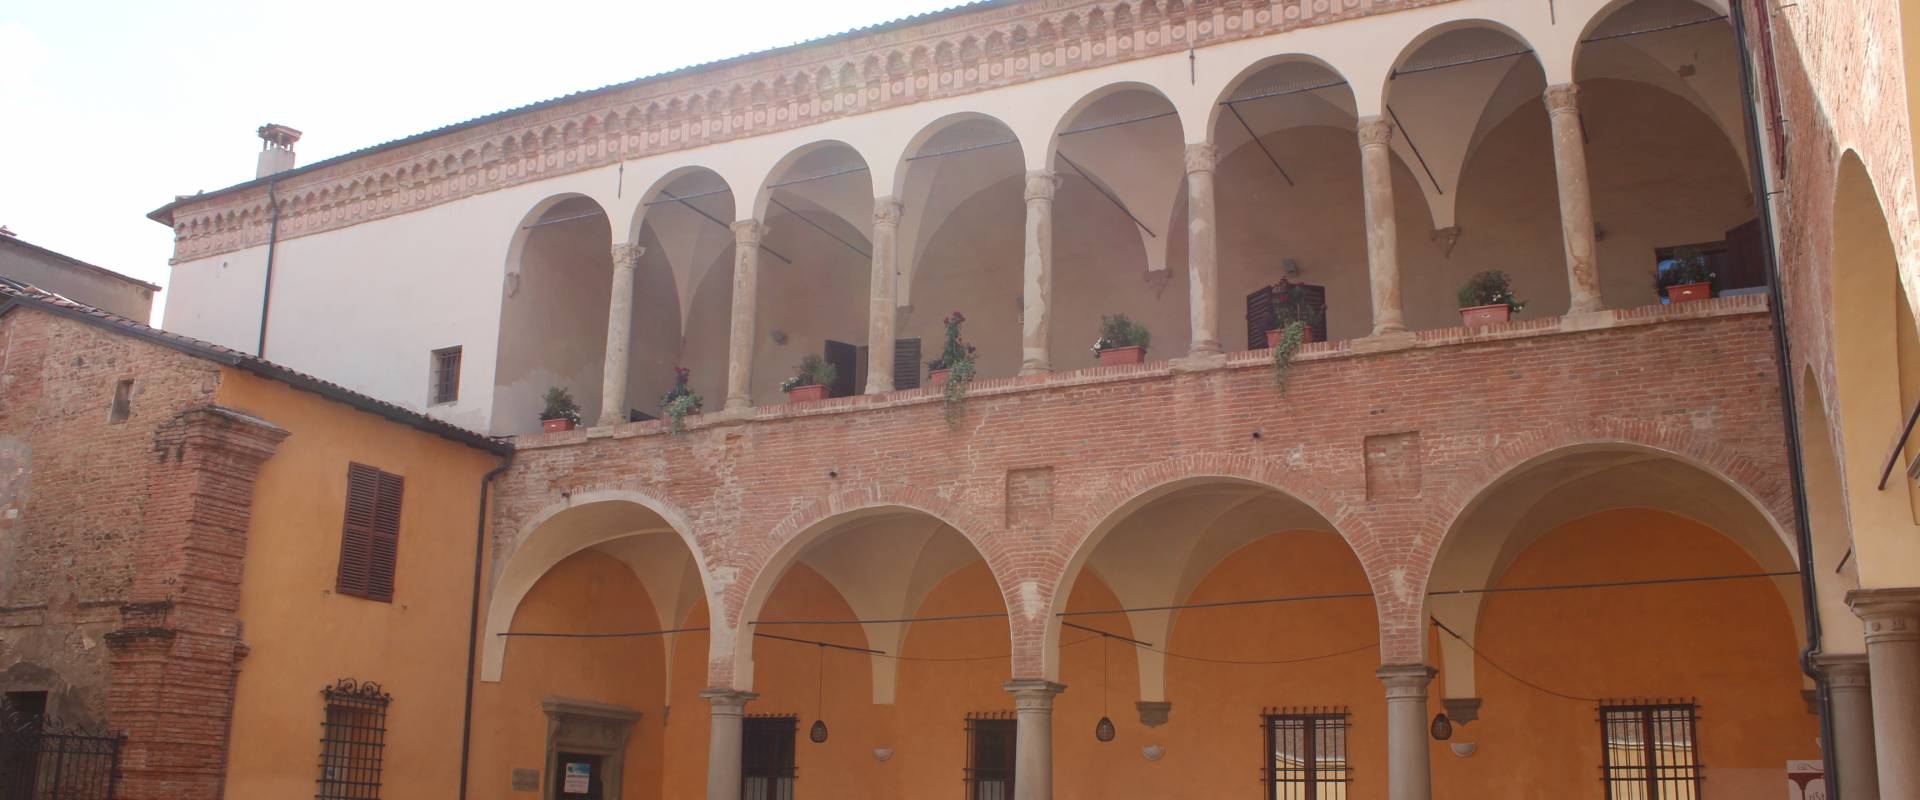 Palazzo Monsignani Sassatelli Cortile foto di Dst81